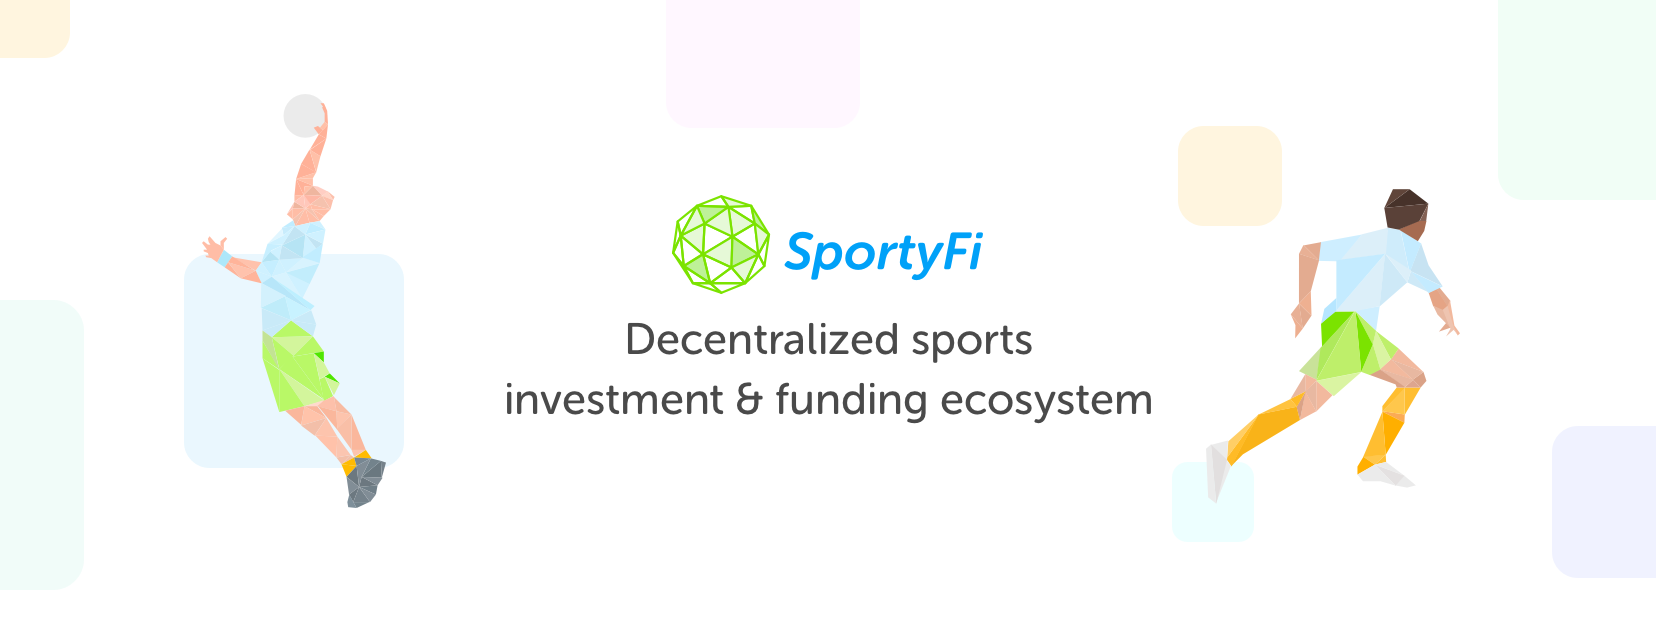 Sportyfi – Decentralized Sports Investment Start-Up